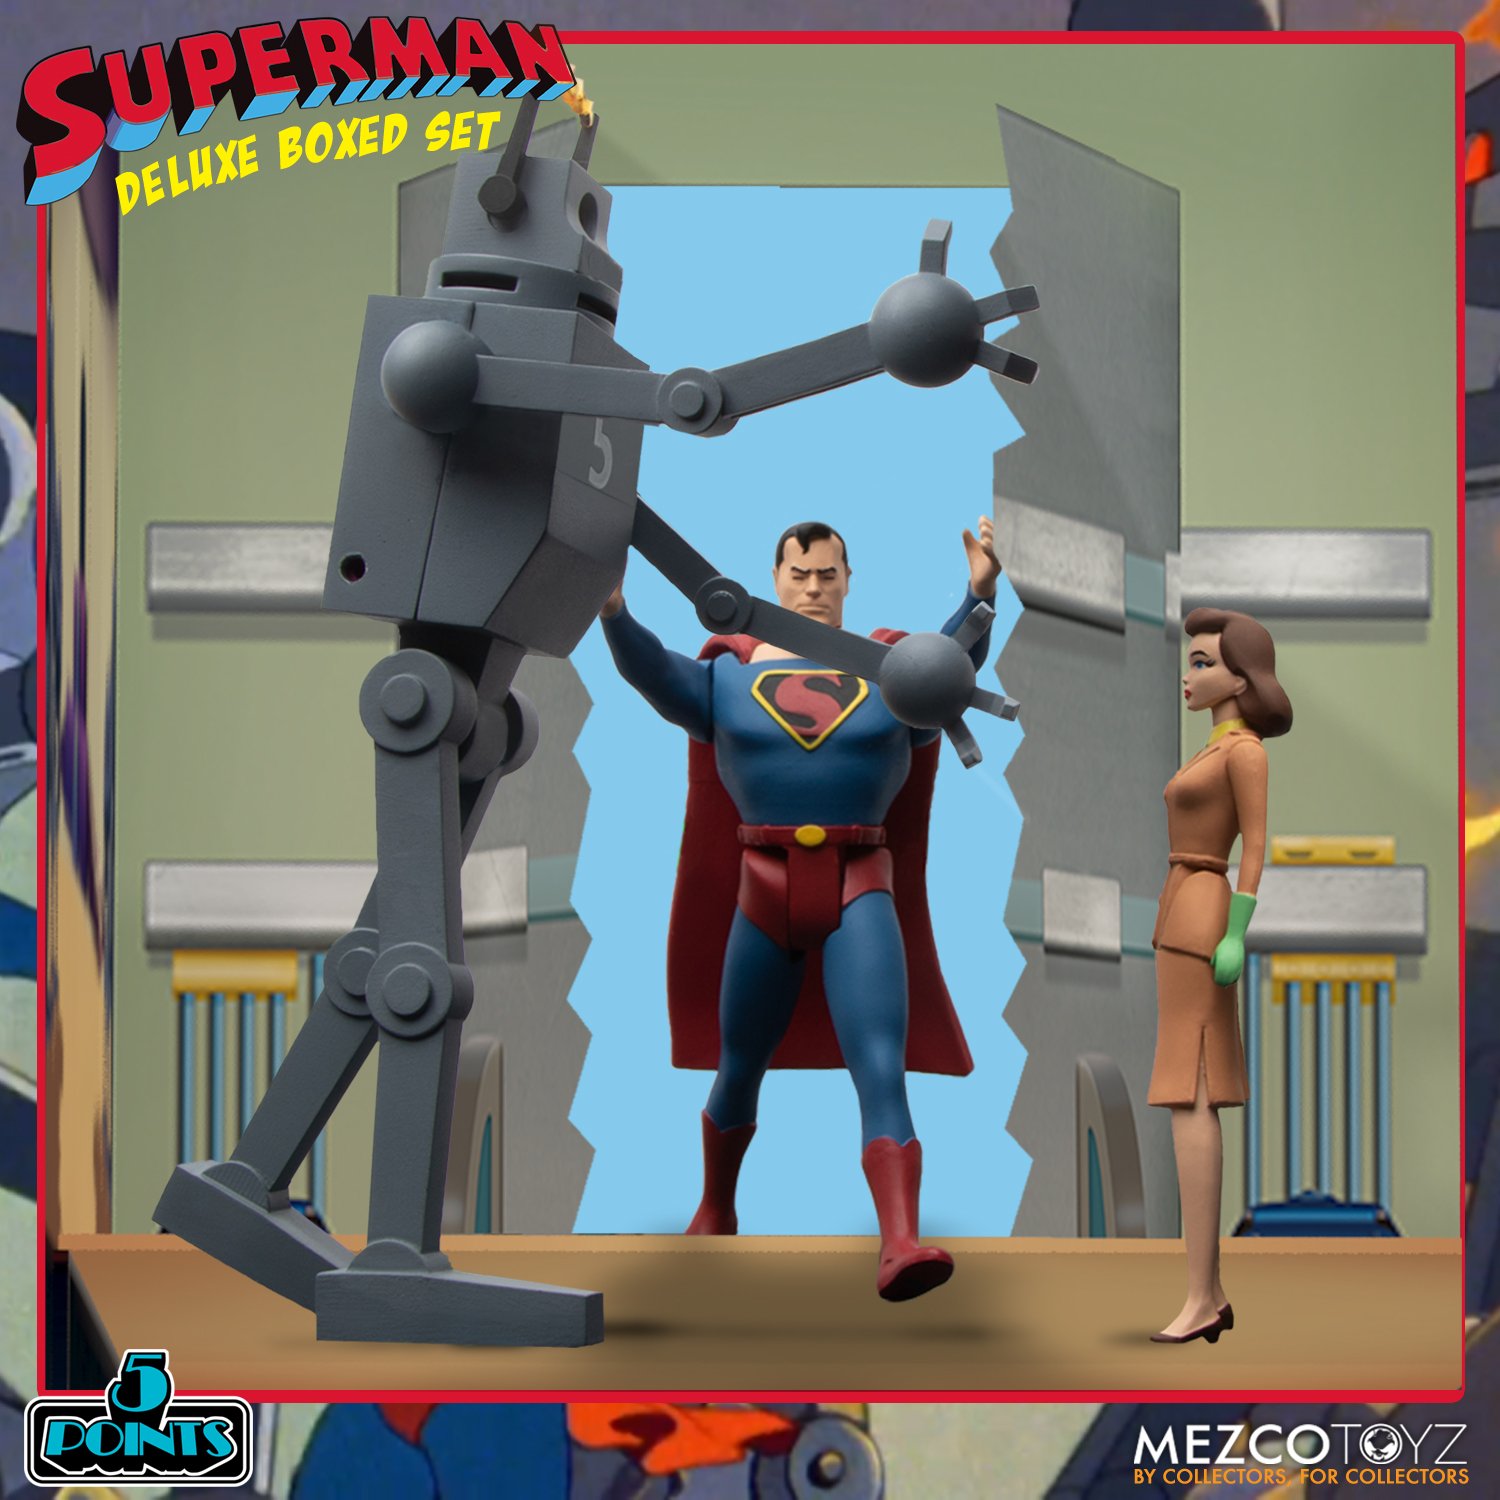 Superman saves!